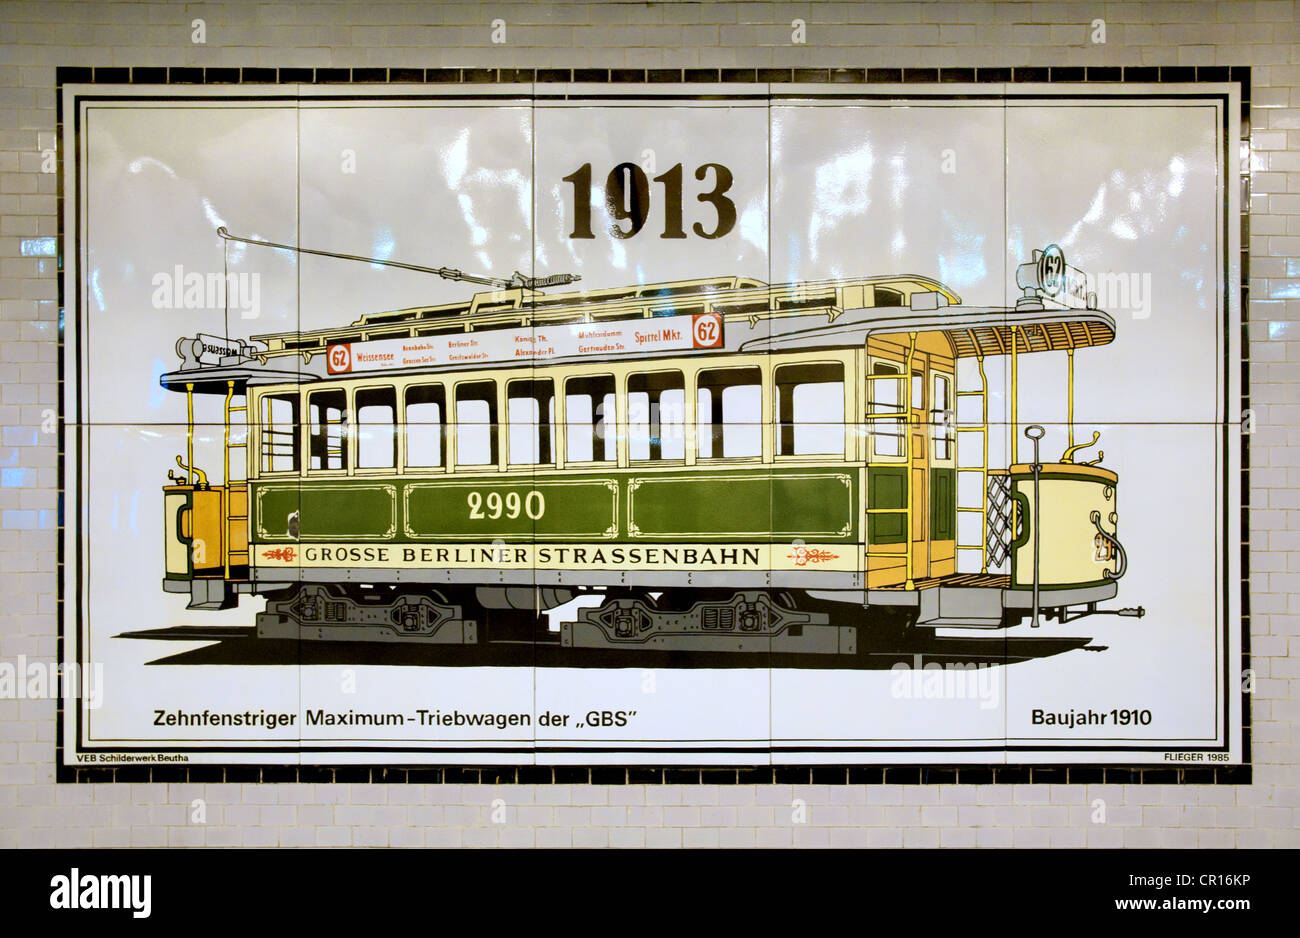 Berlin, Germany. Klosterstrasse U-Bahn (underground) station. Tiles on wall - picture of 1910 Grosse Berliner Strassenbahn tram Stock Photo